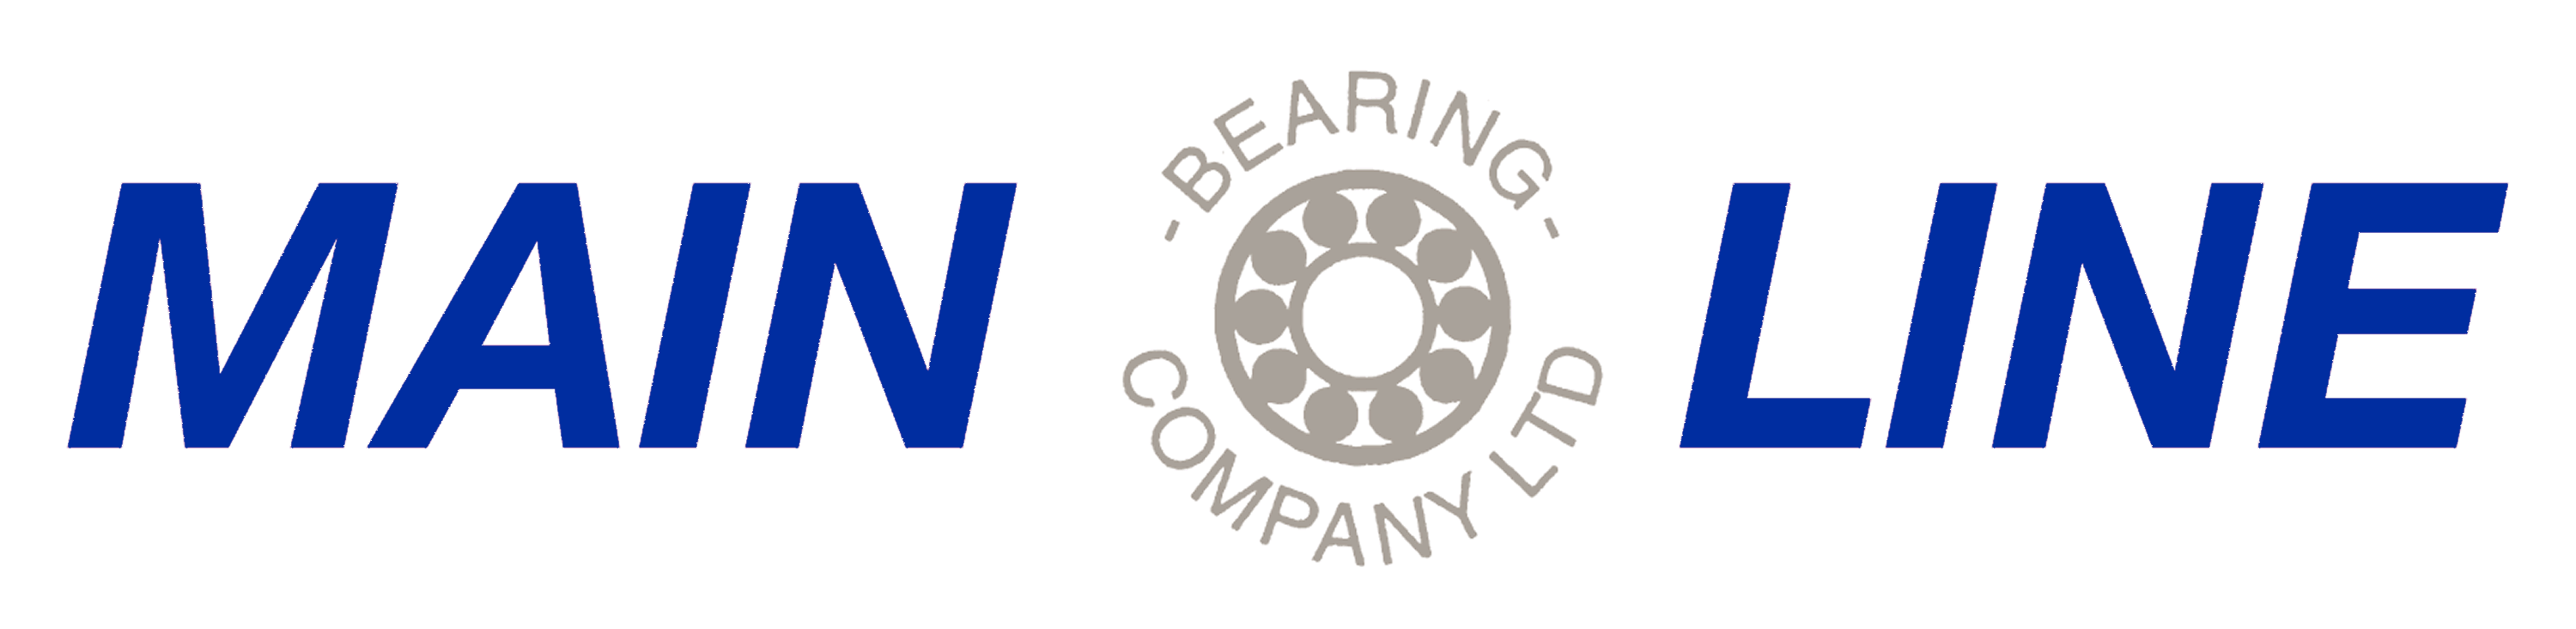 Main Line Bearing Company Limited